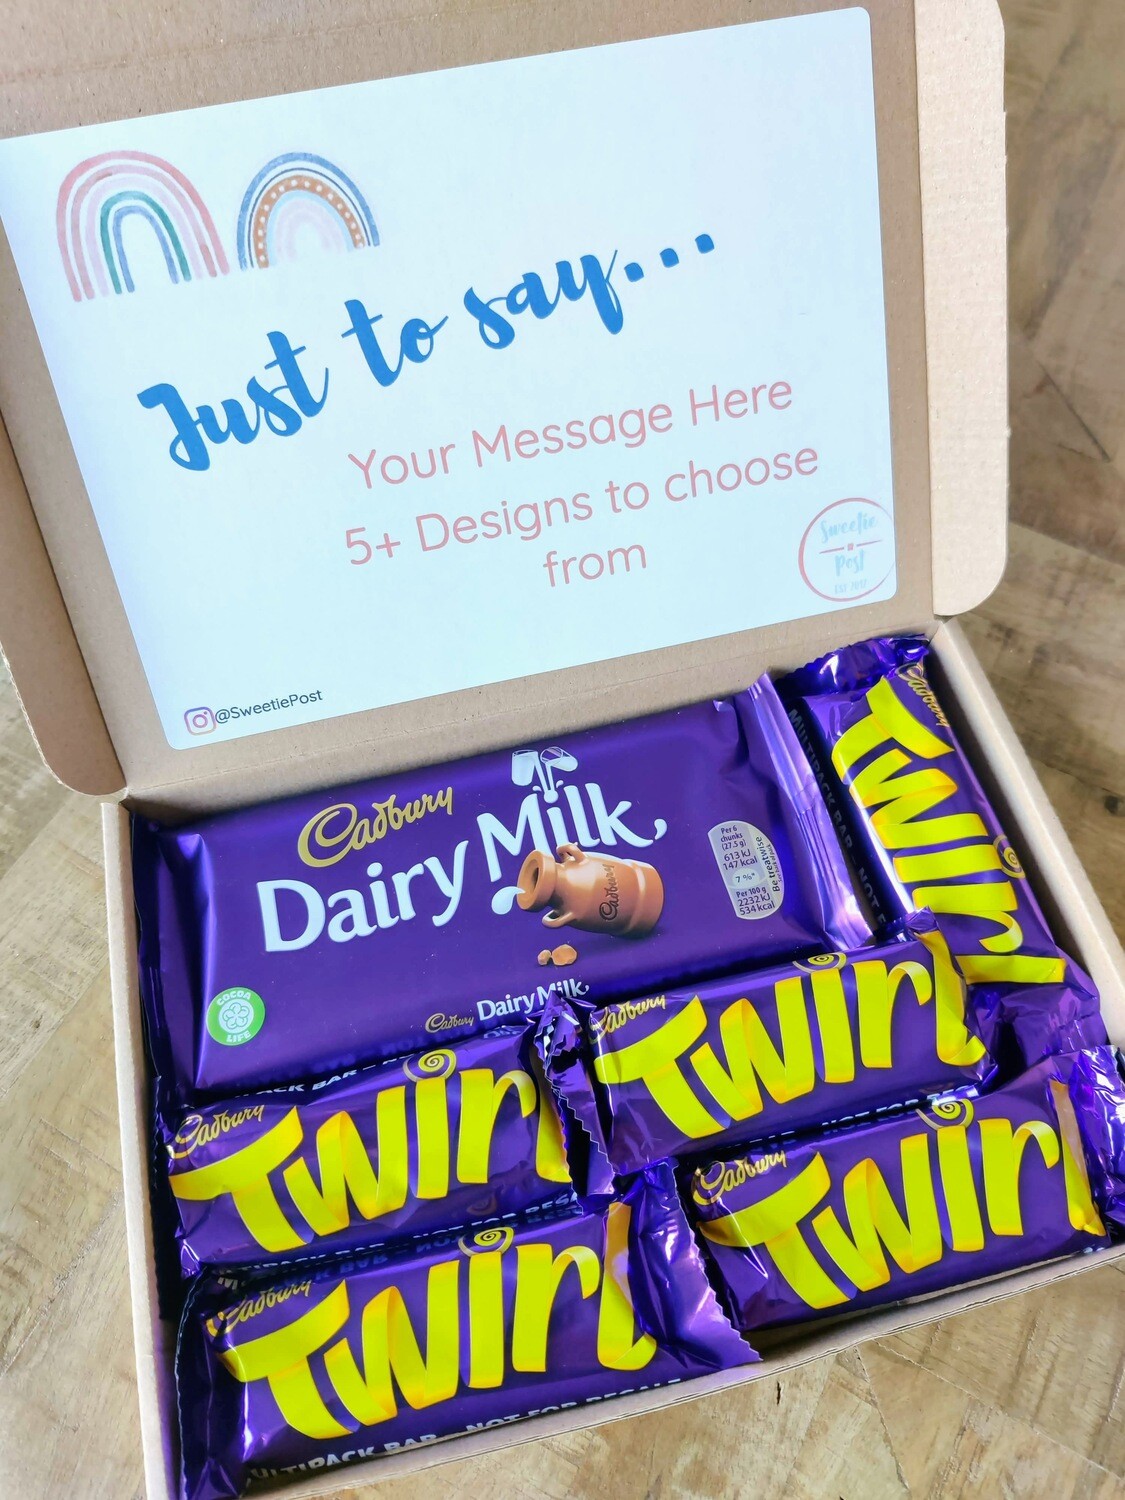 Cadbury Twirl Gift Box